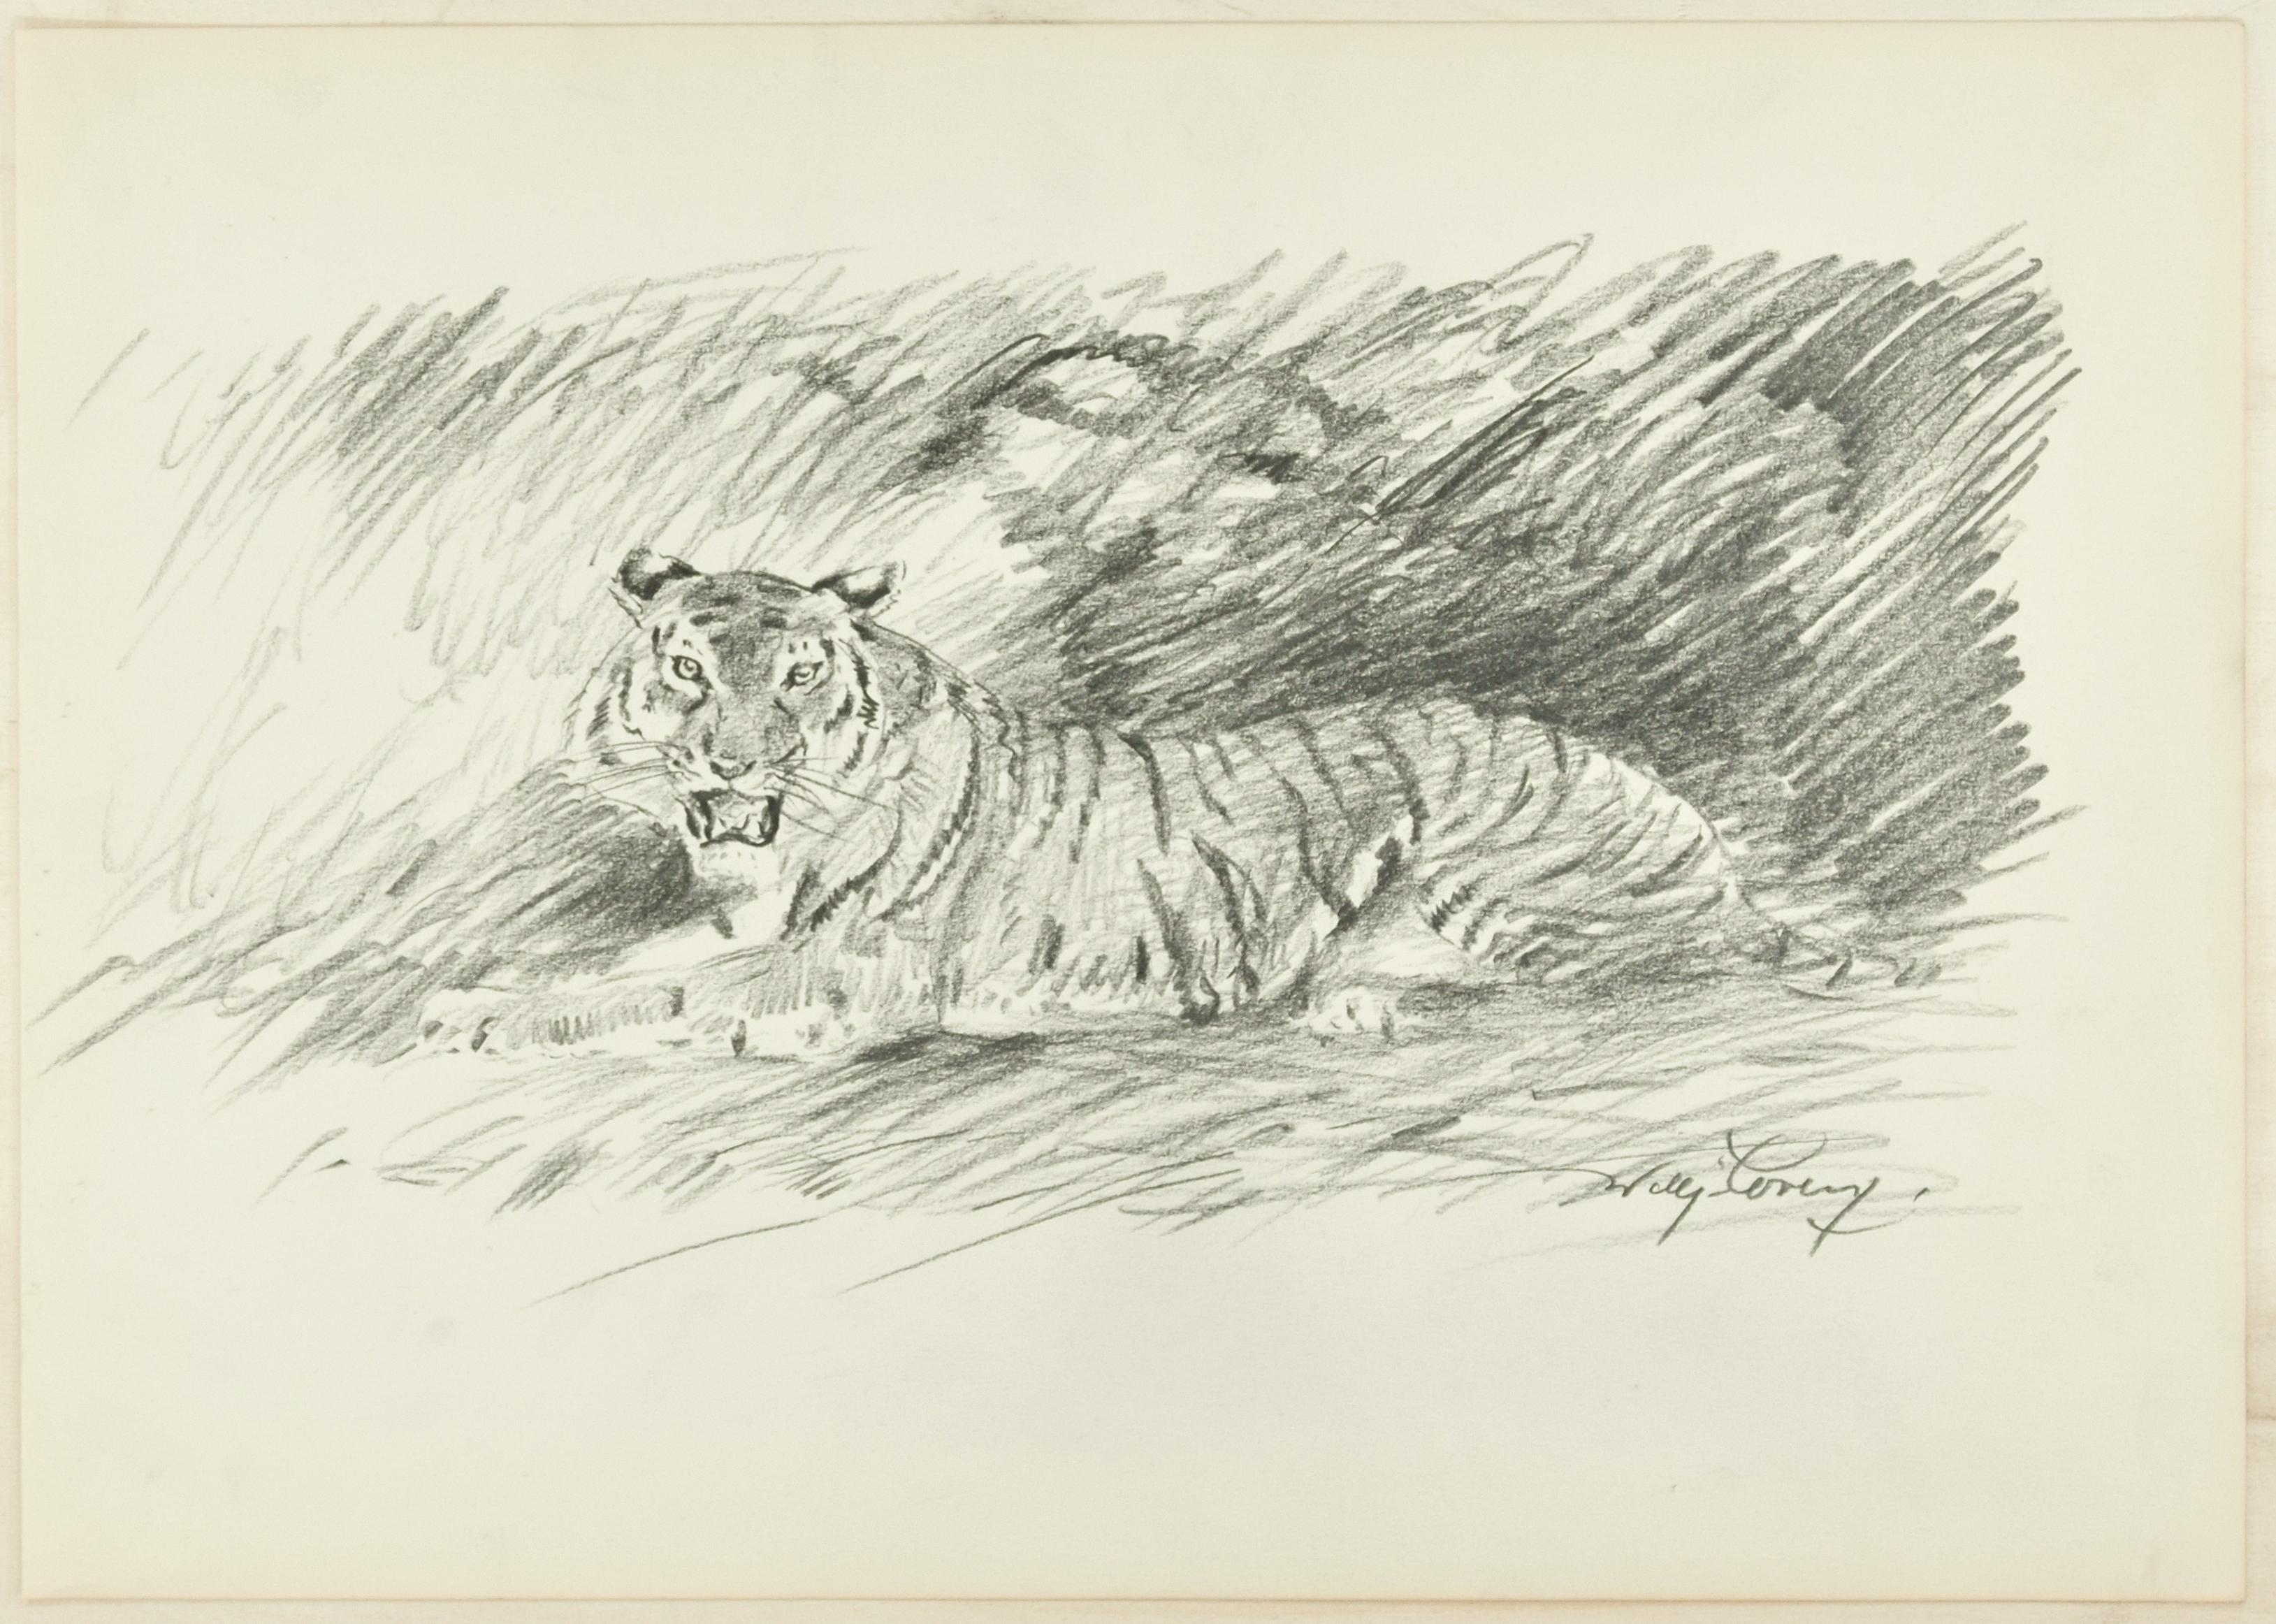 Wilhelm Lorenz Figurative Art - Roaring Tiger - Original Pencil Drawing by Willy Lorenz - 1940s